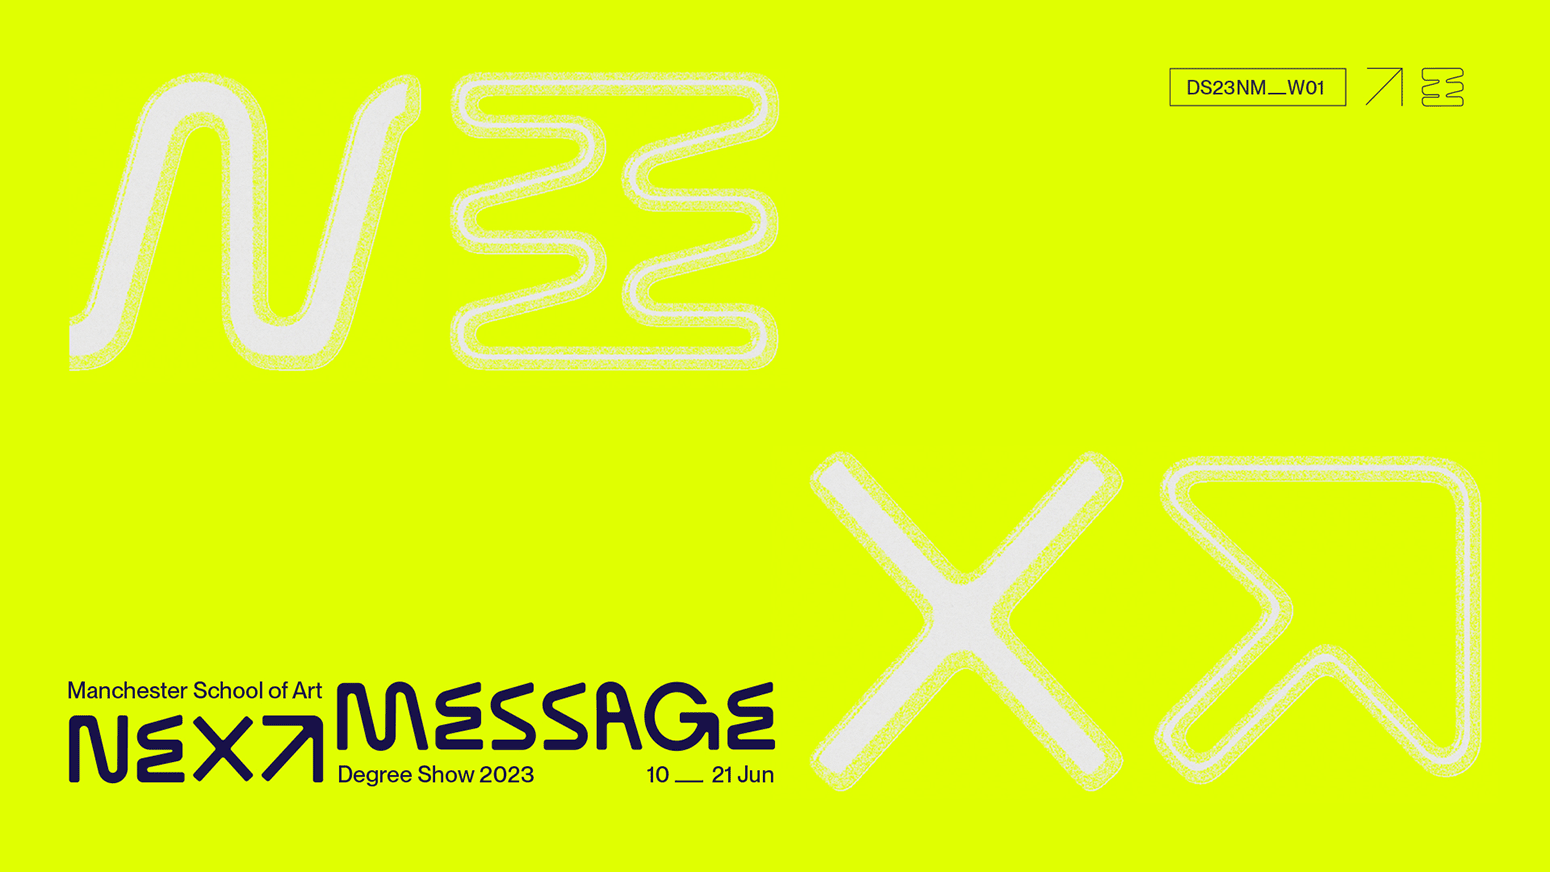 Next Message - Degree Show 2023